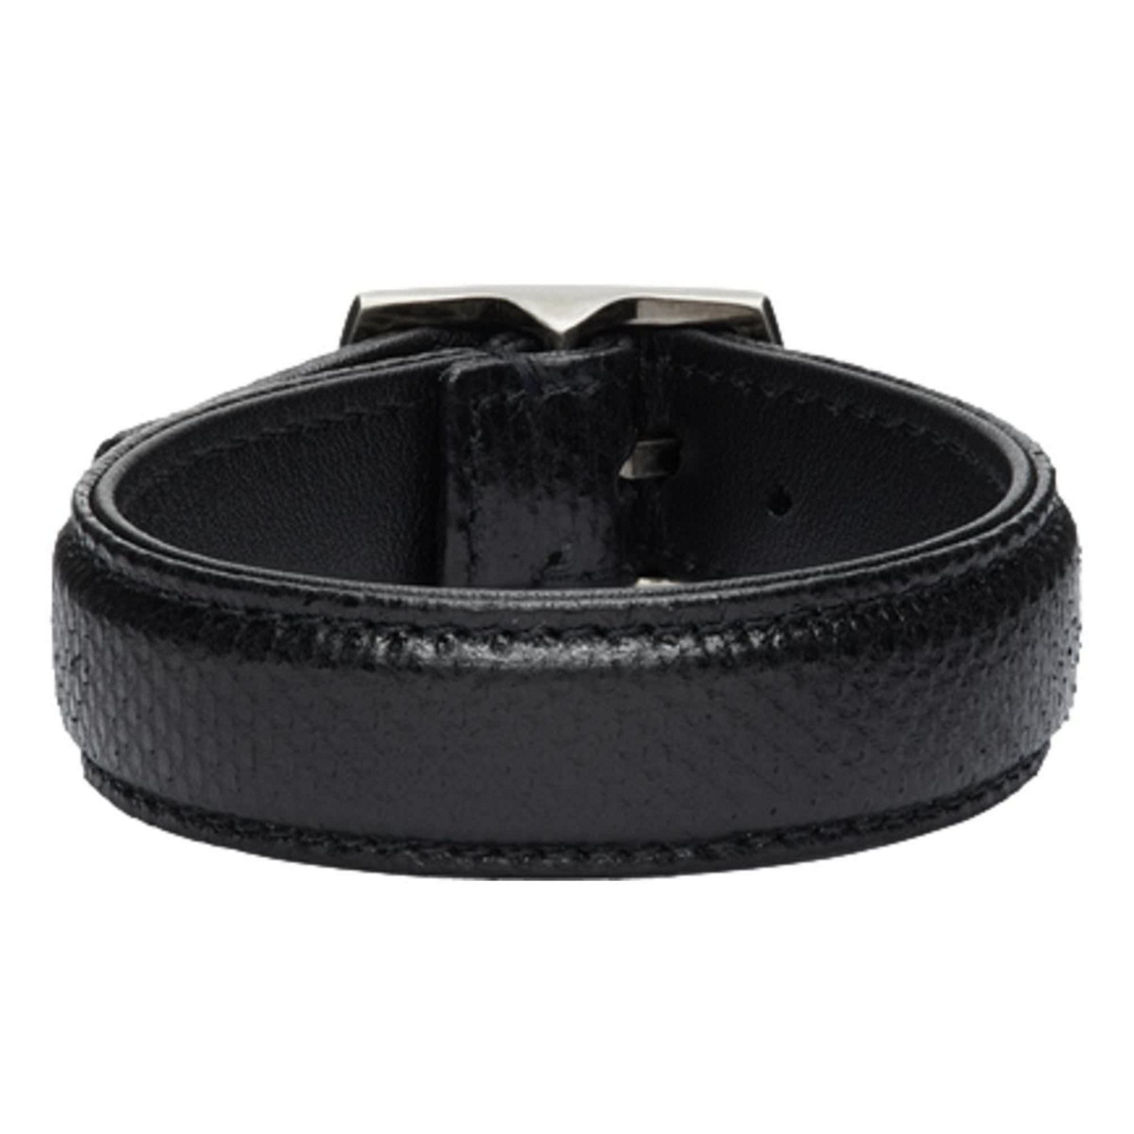 Saint Laurent Black Leather Snake Embossed Buckle Bracelet (New) - Image 3 of 4